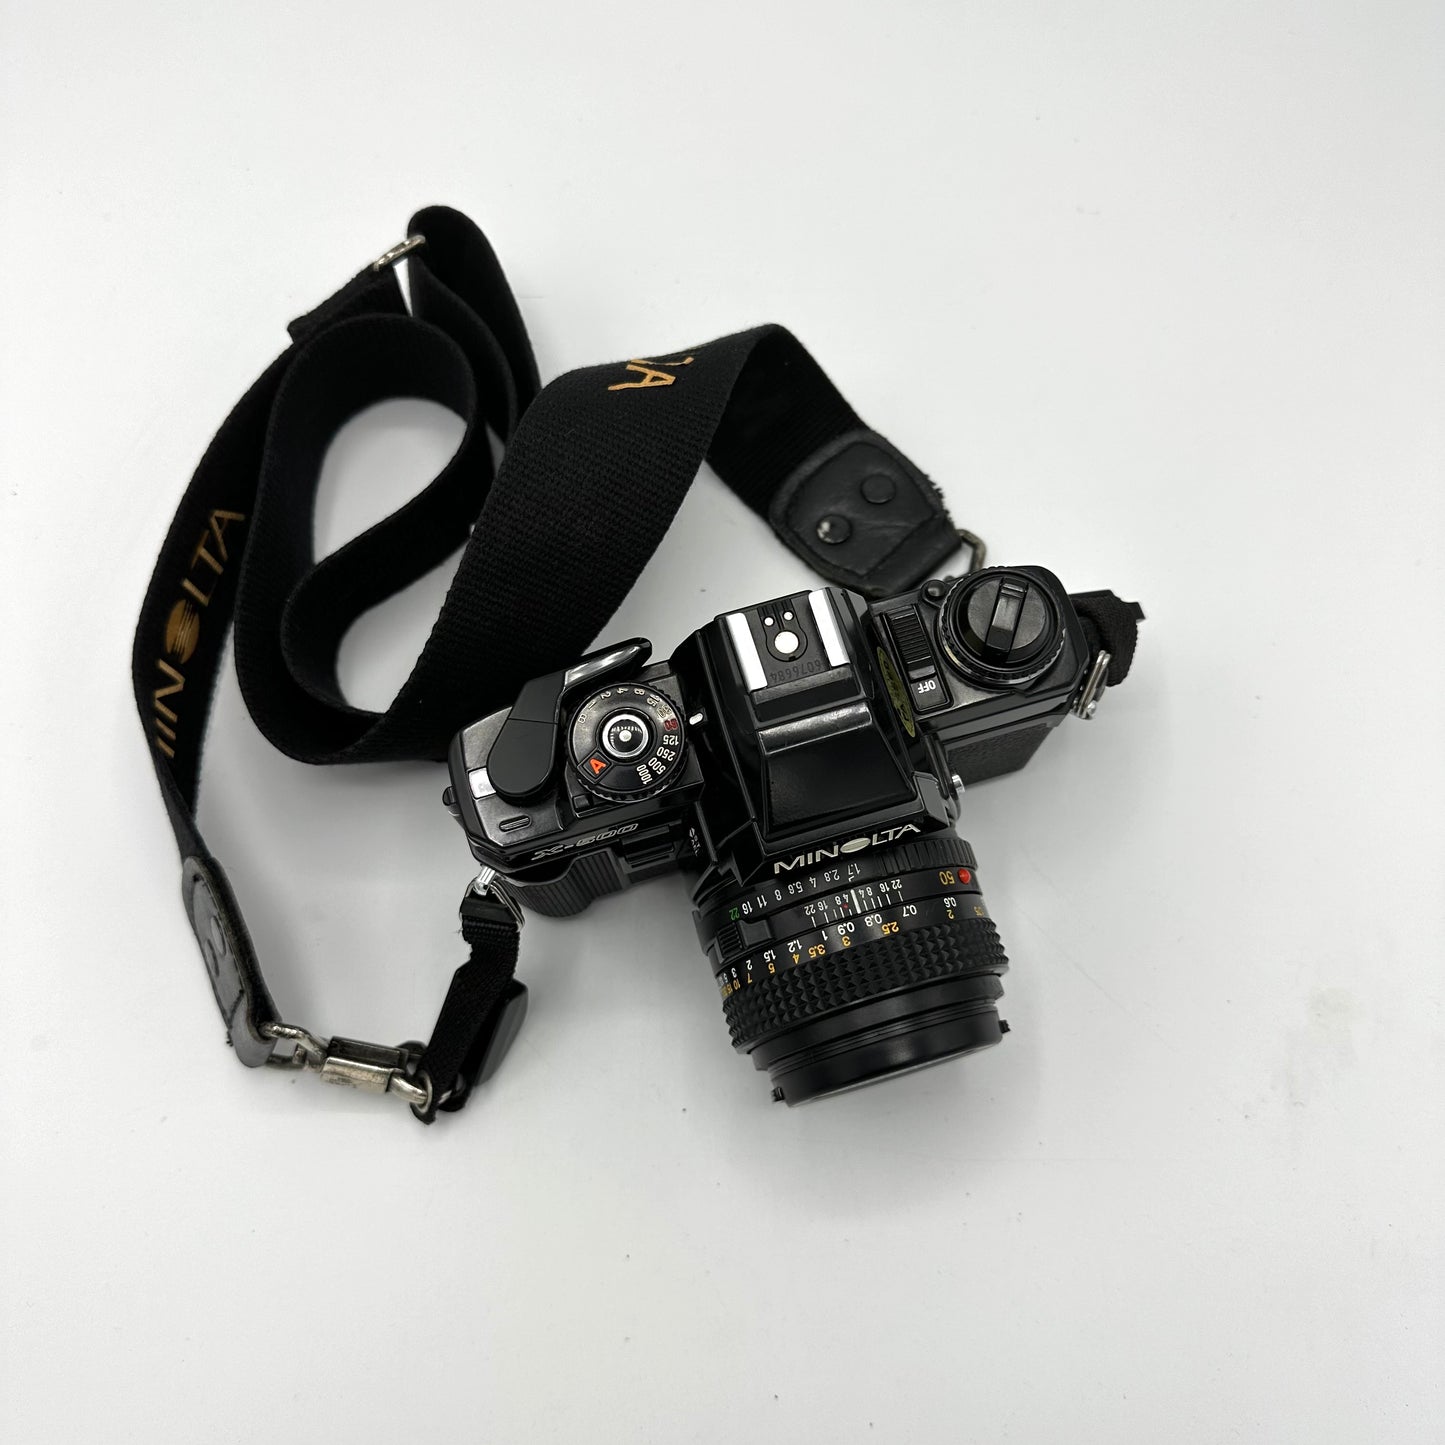 Rare Minolta X-500 35mm Film SLR with Lens